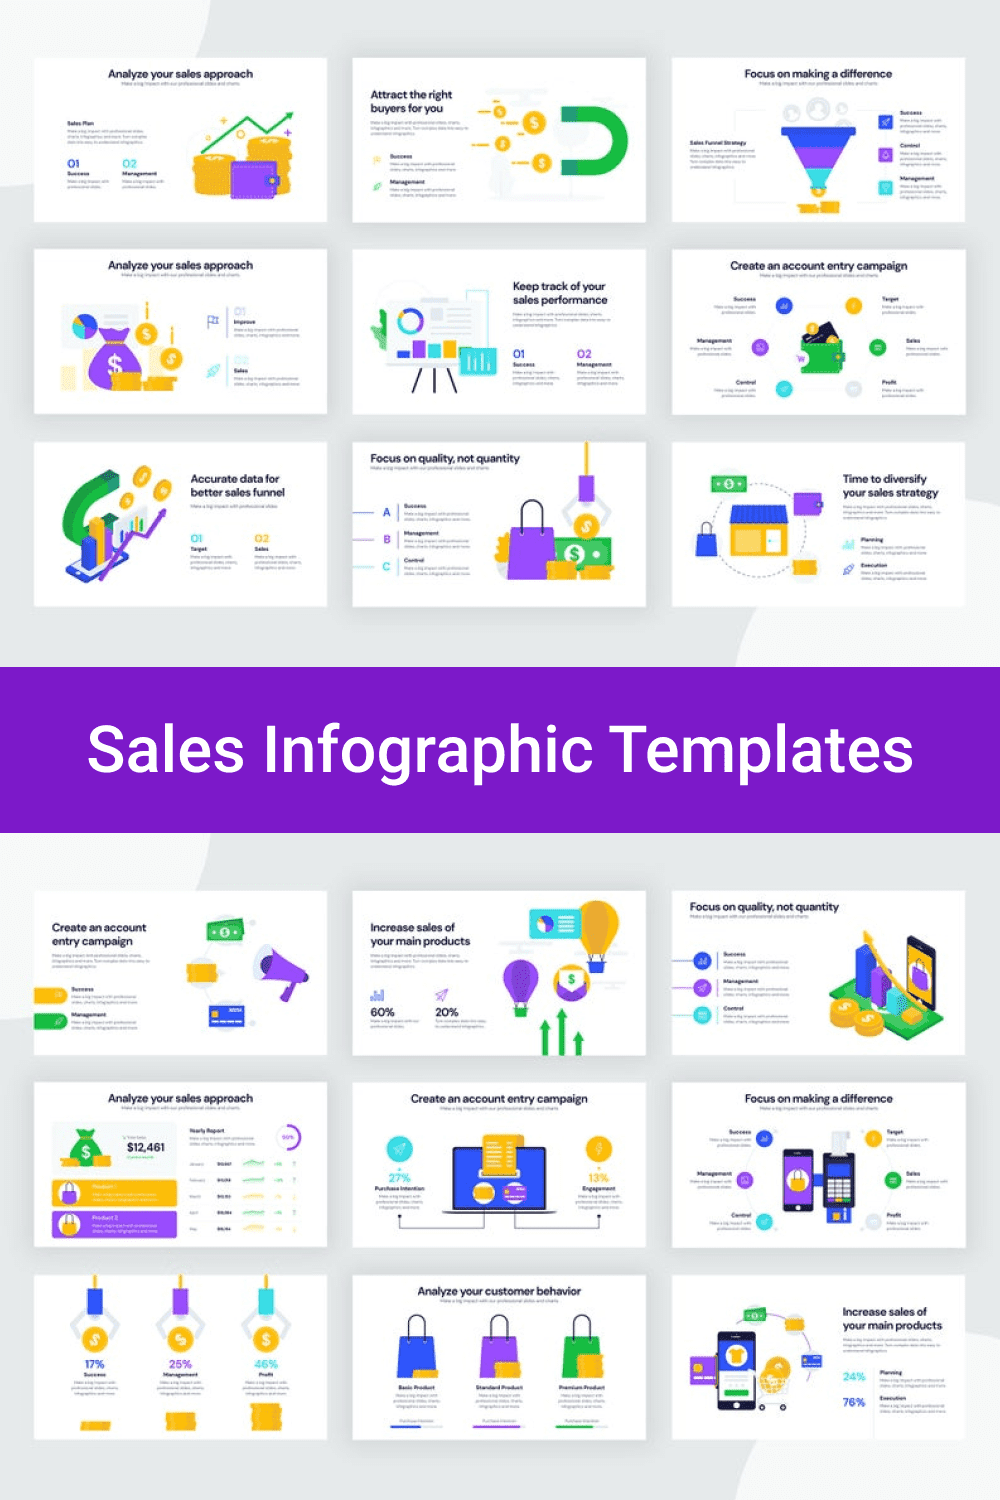 Sales Infographic Templates.